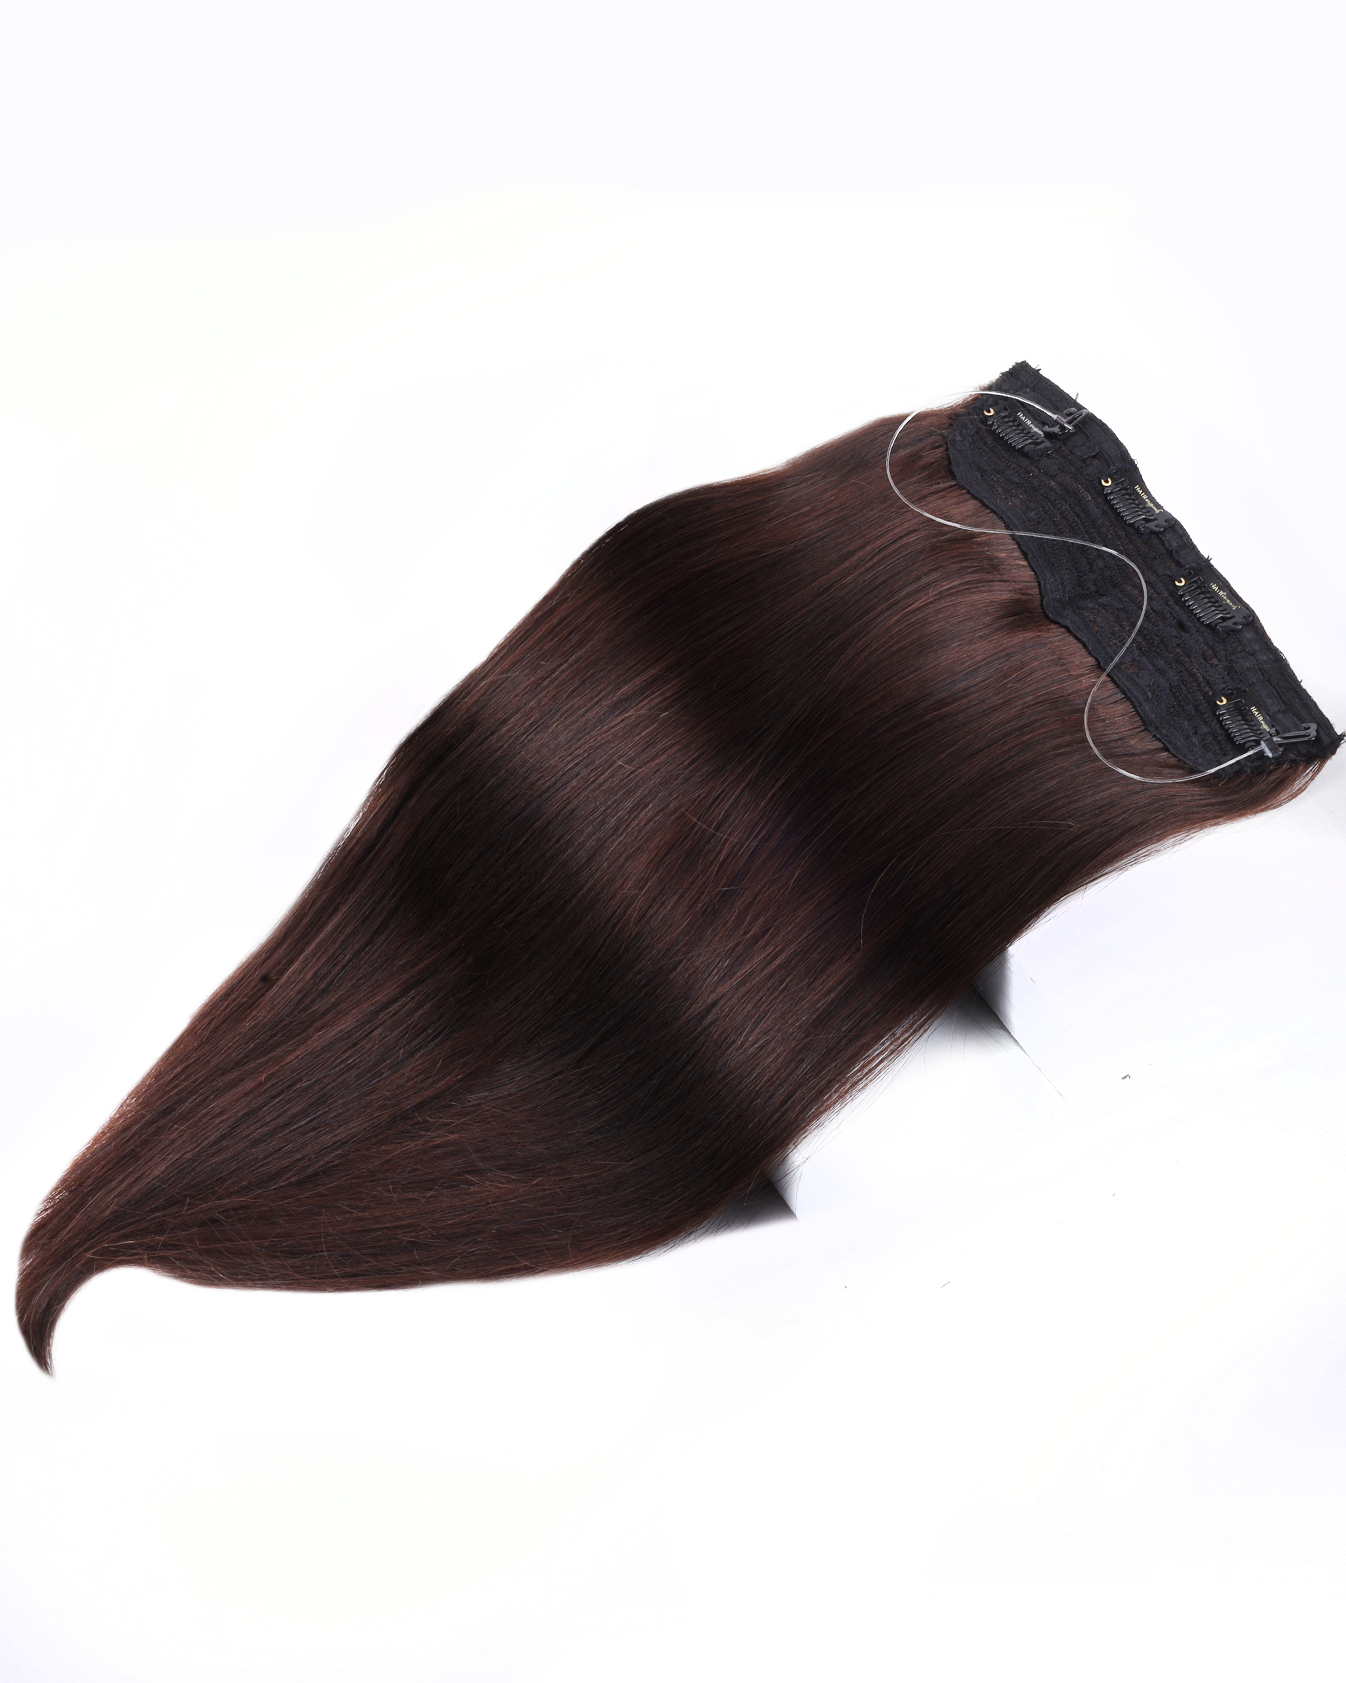 Halo Hair Extensions  HairOriginals Natural Brown Wavy 22 Inch